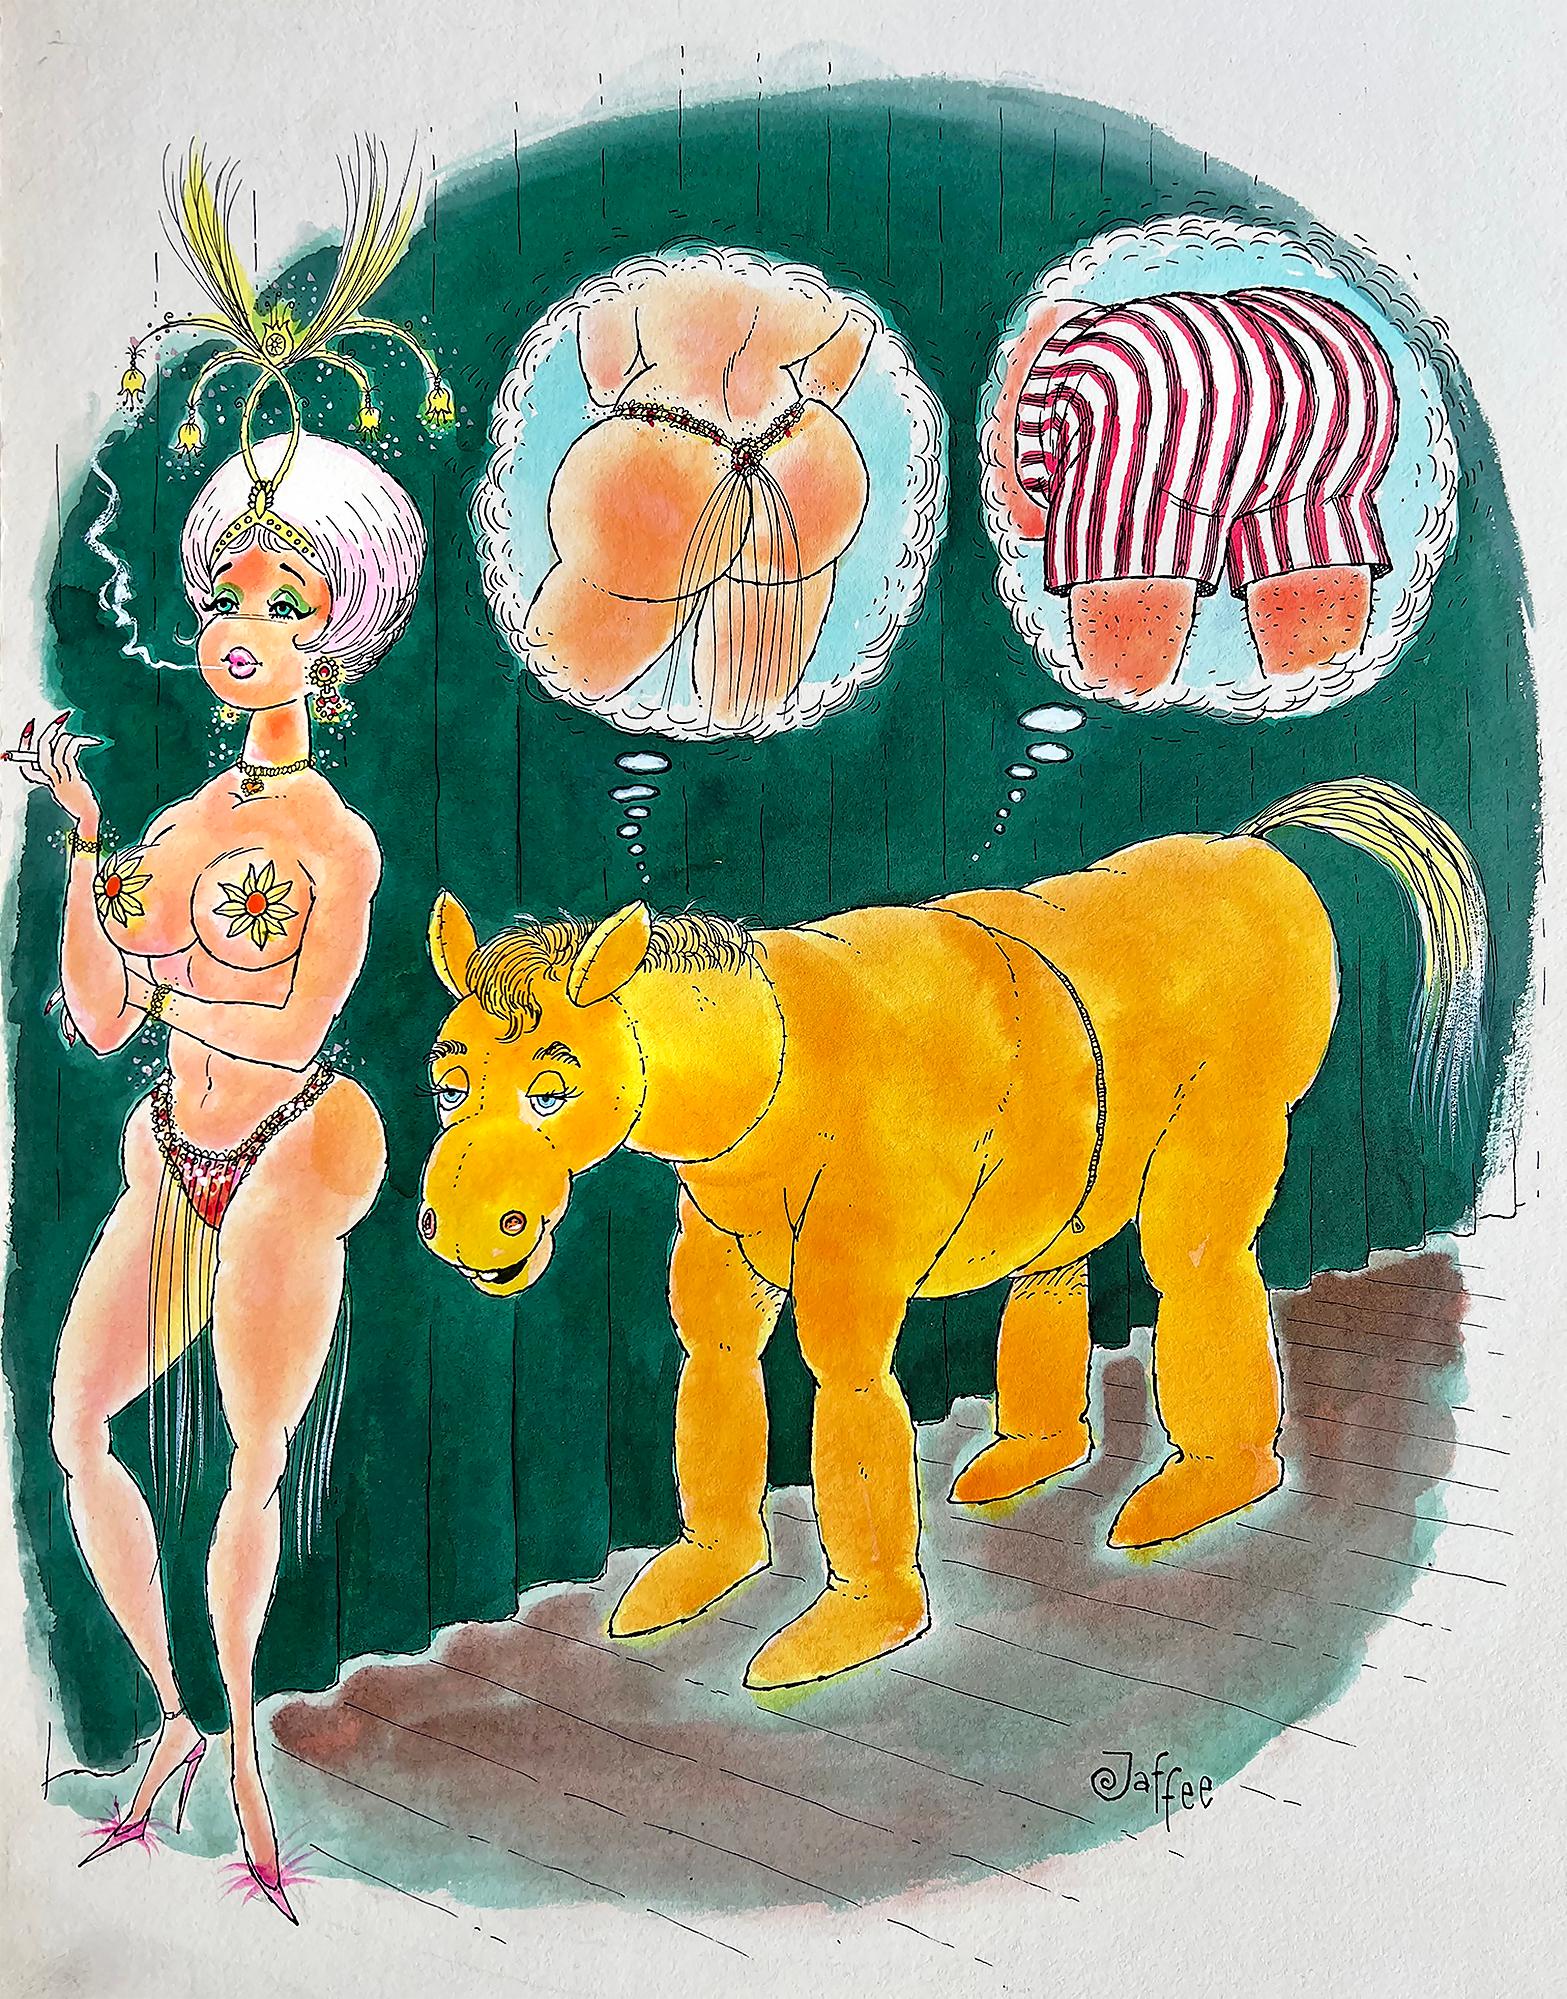 Sexy Akt Show Girl Buttocks Pondered by Show Horse - Sexy Cartoon Mad Magazine